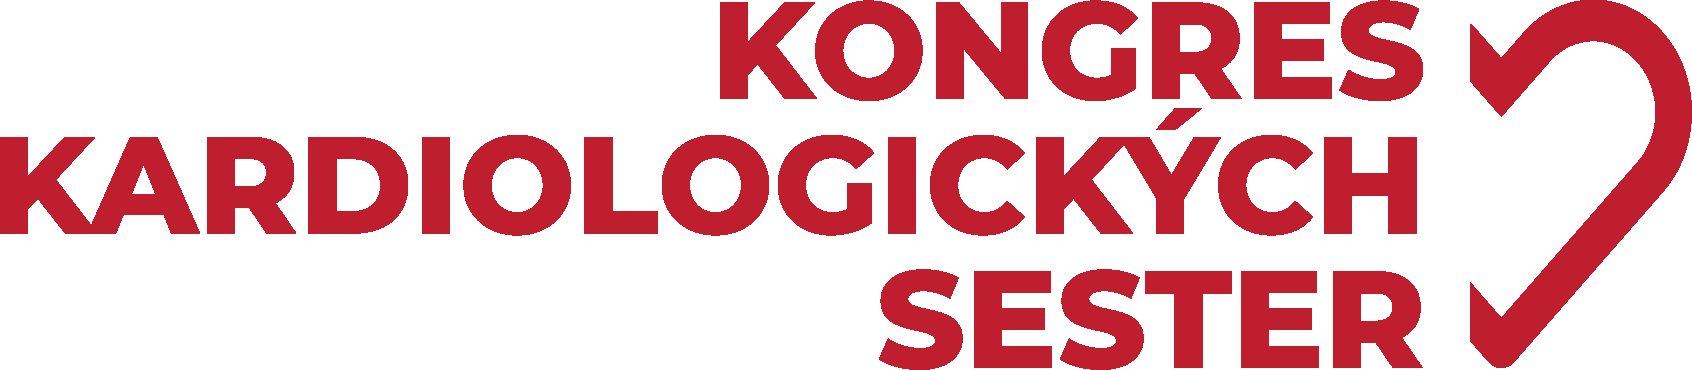 KARDIOLOGICKYCH SESTER logo POS RGB